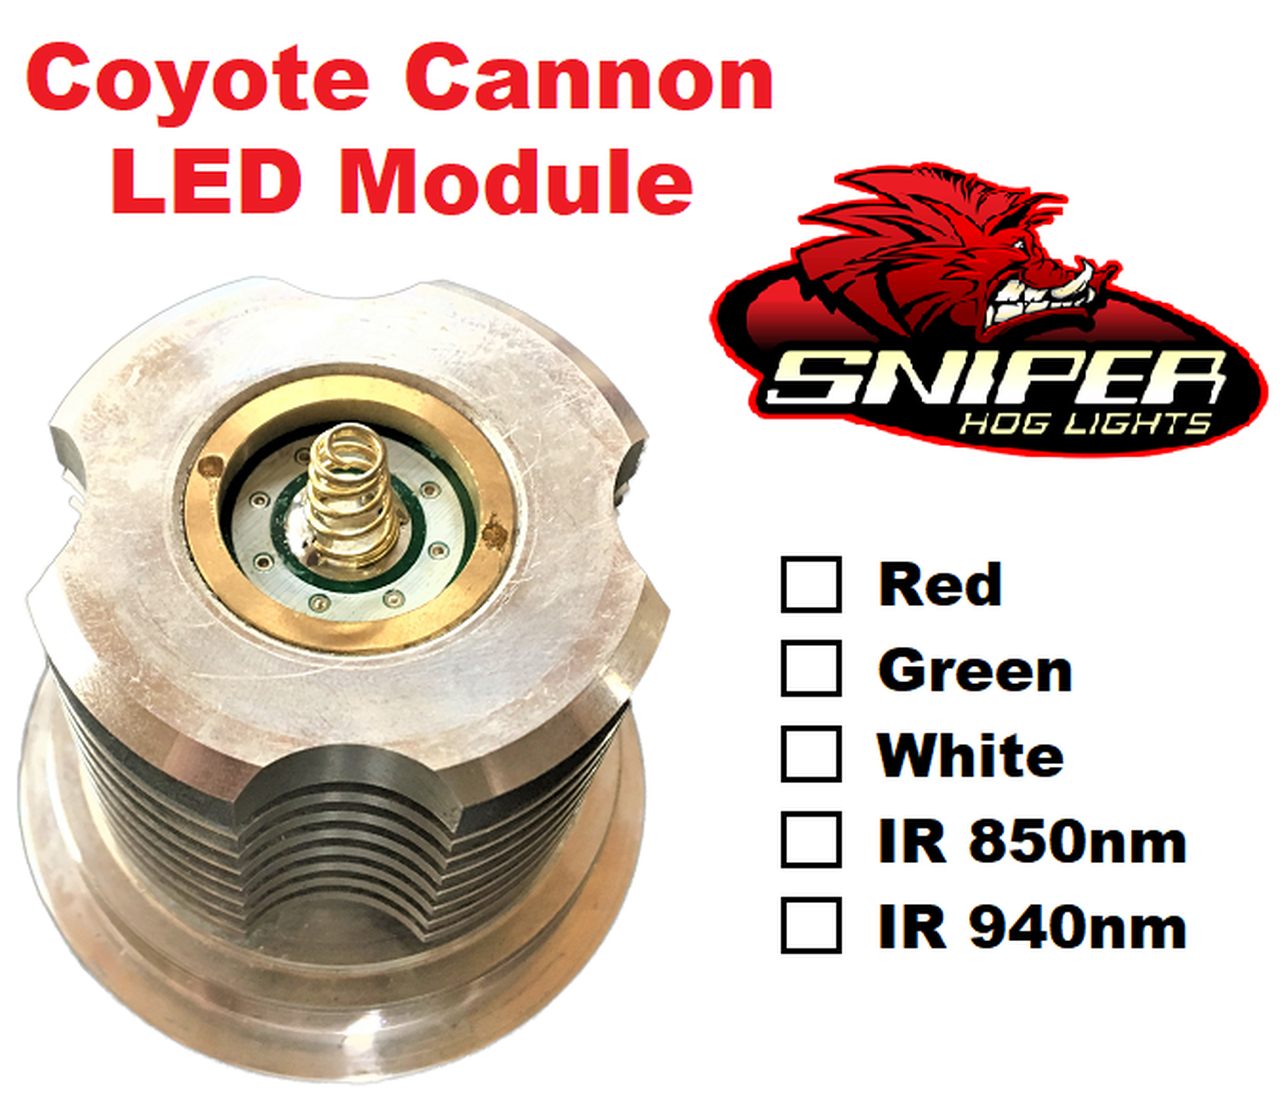 Sniper Hog Lights Coyote Cannon LED Module